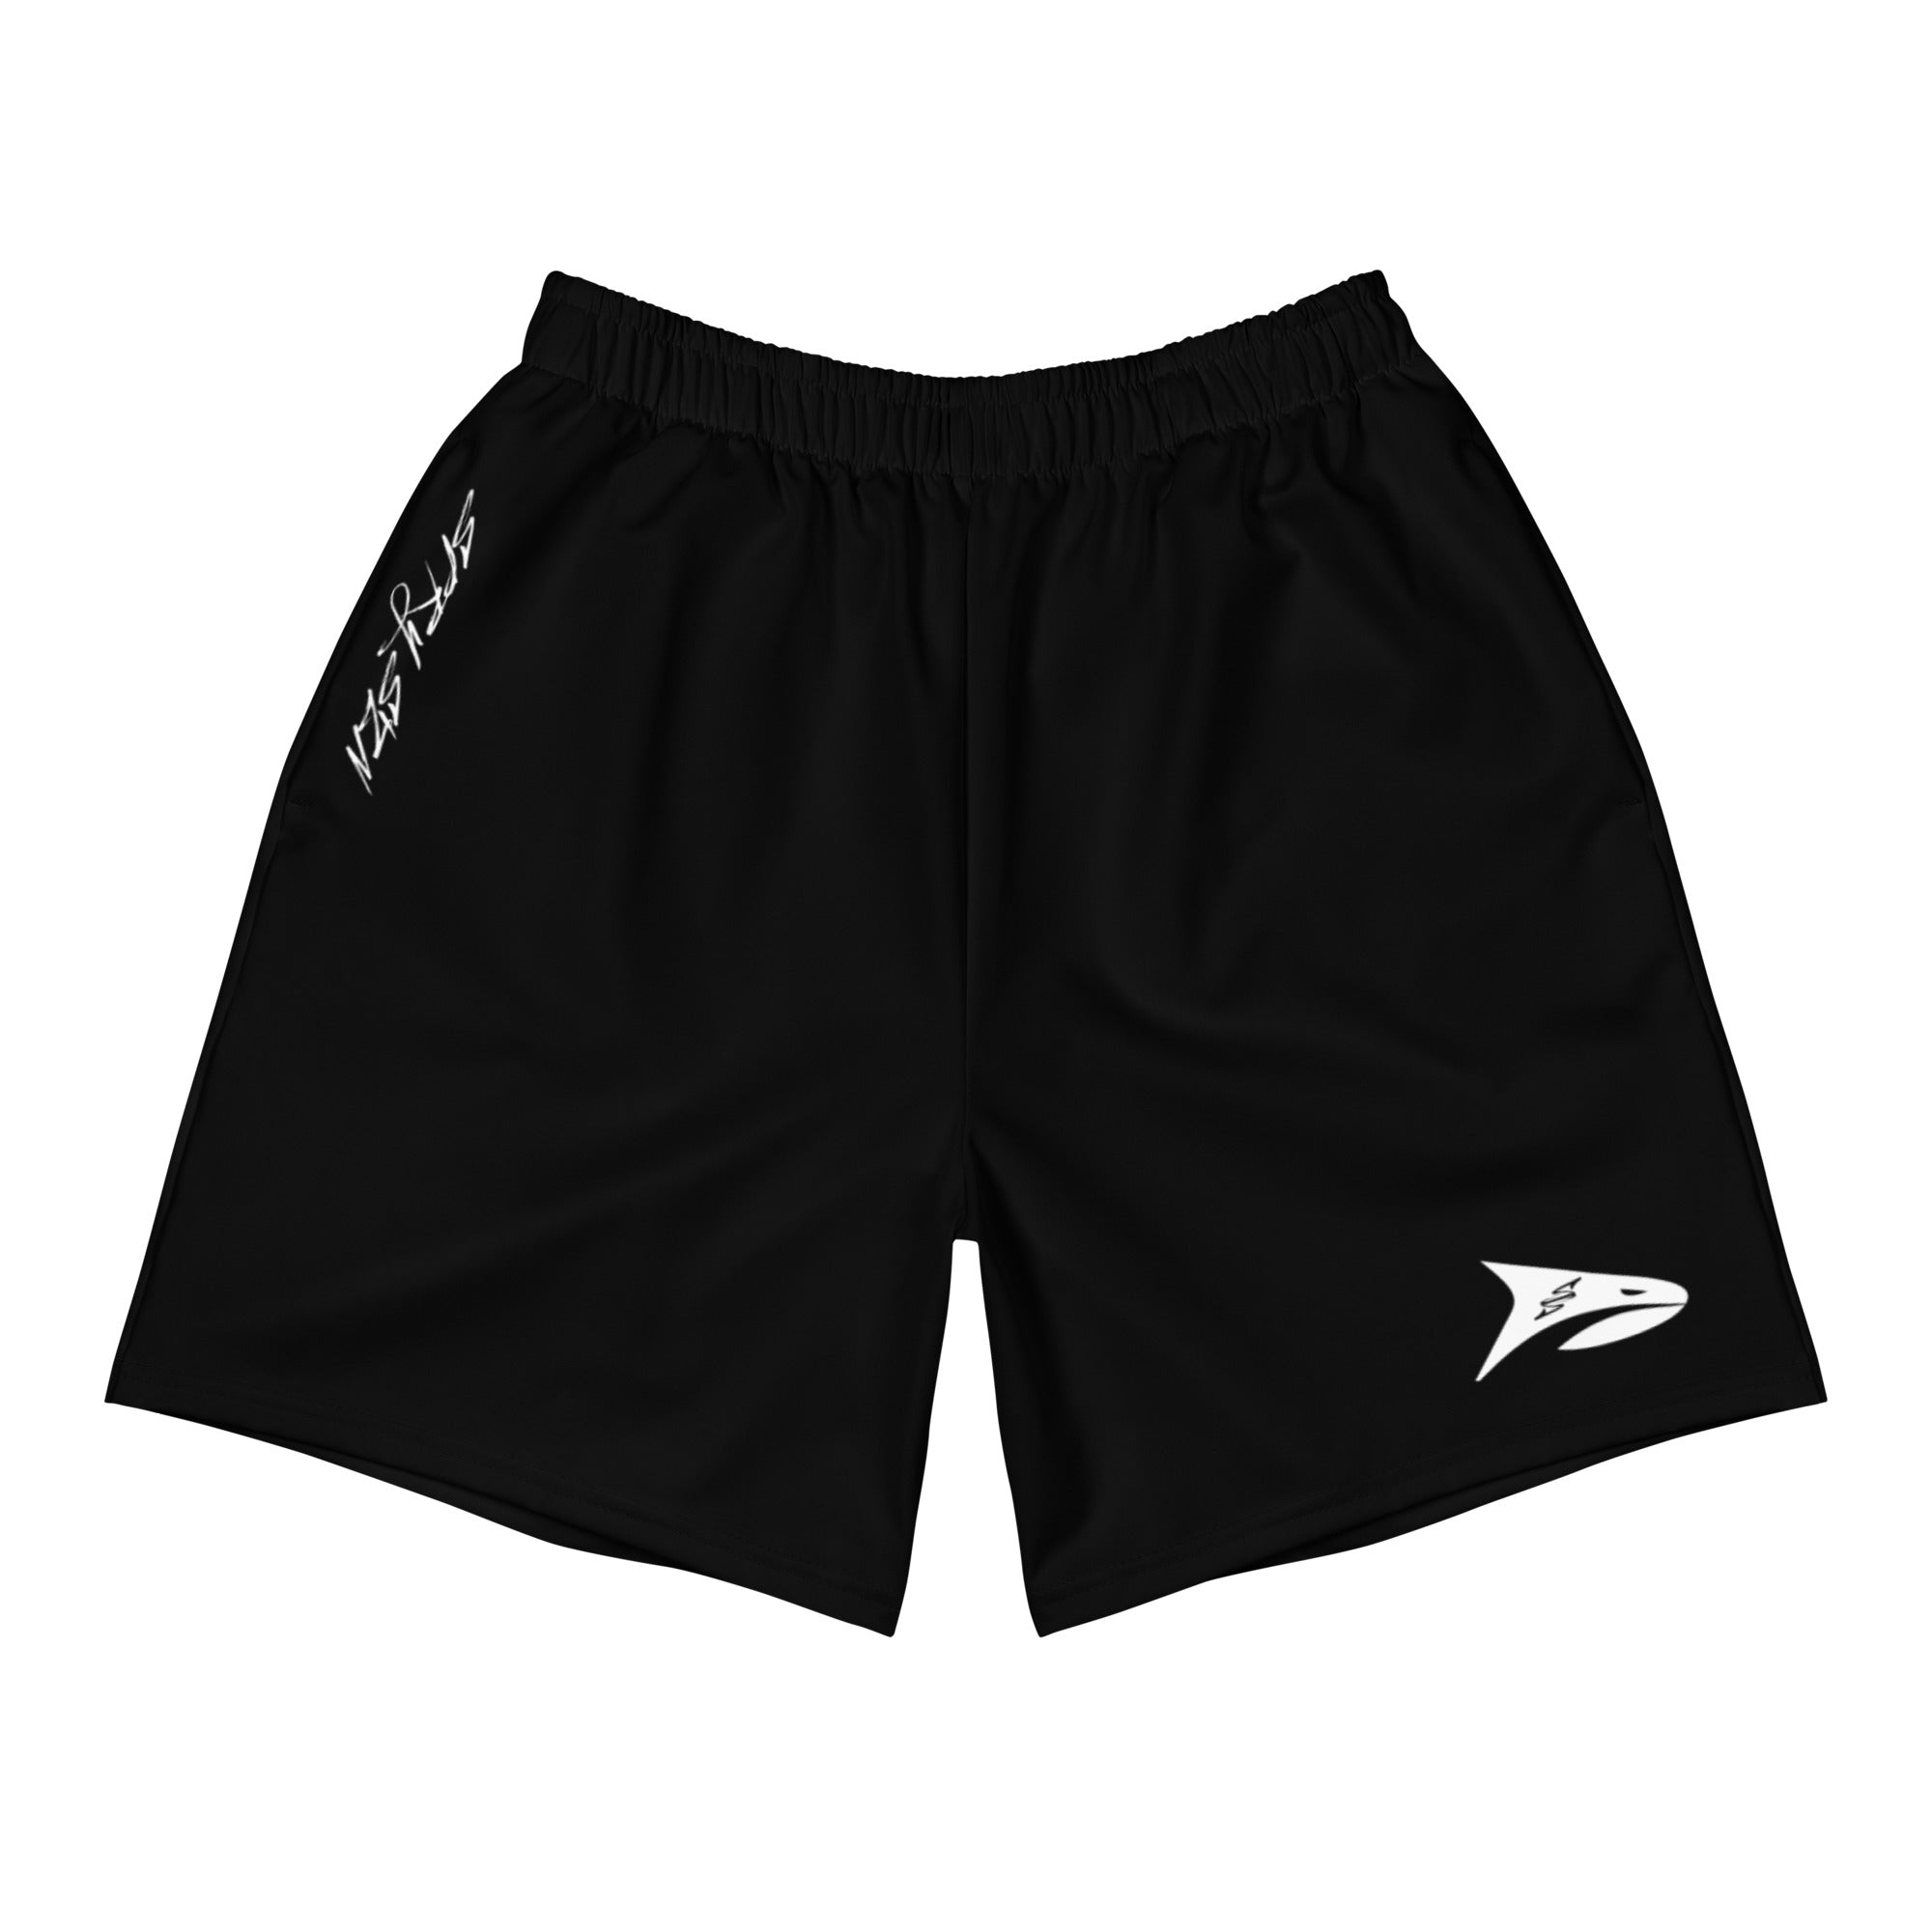 SPRY SZN White Shark Men's Black Athletic Shorts